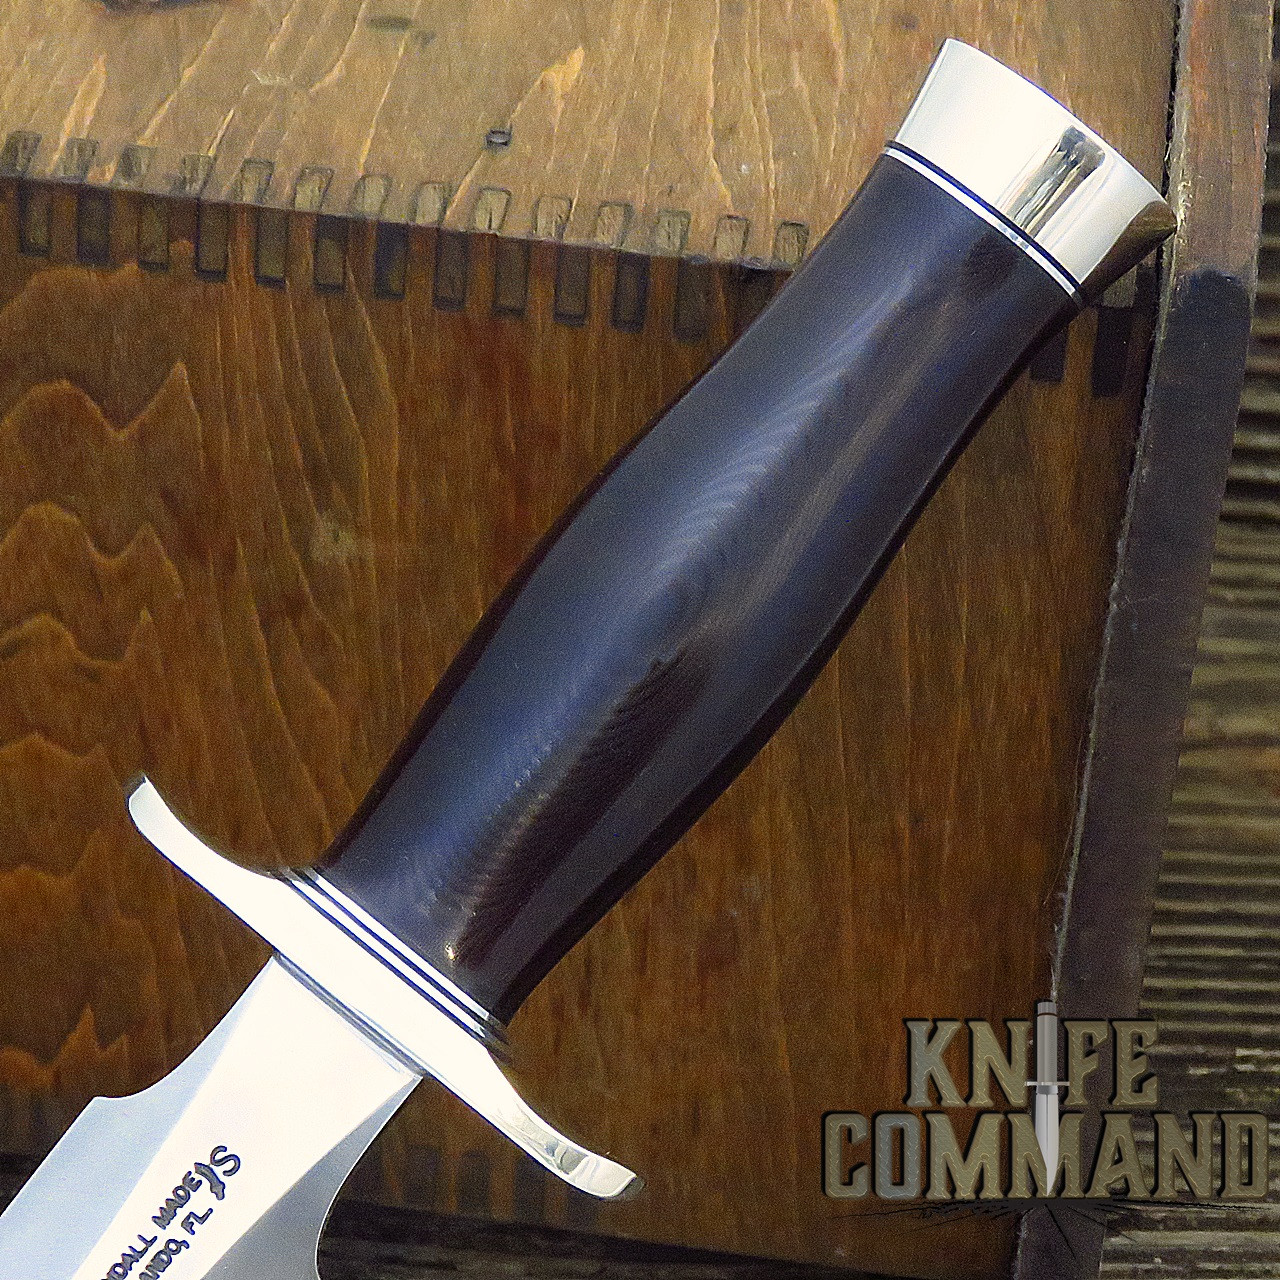 Randall Made Knives Model 2 7 SS Marroon Micarta Fighting Stiletto Knife LOADED!